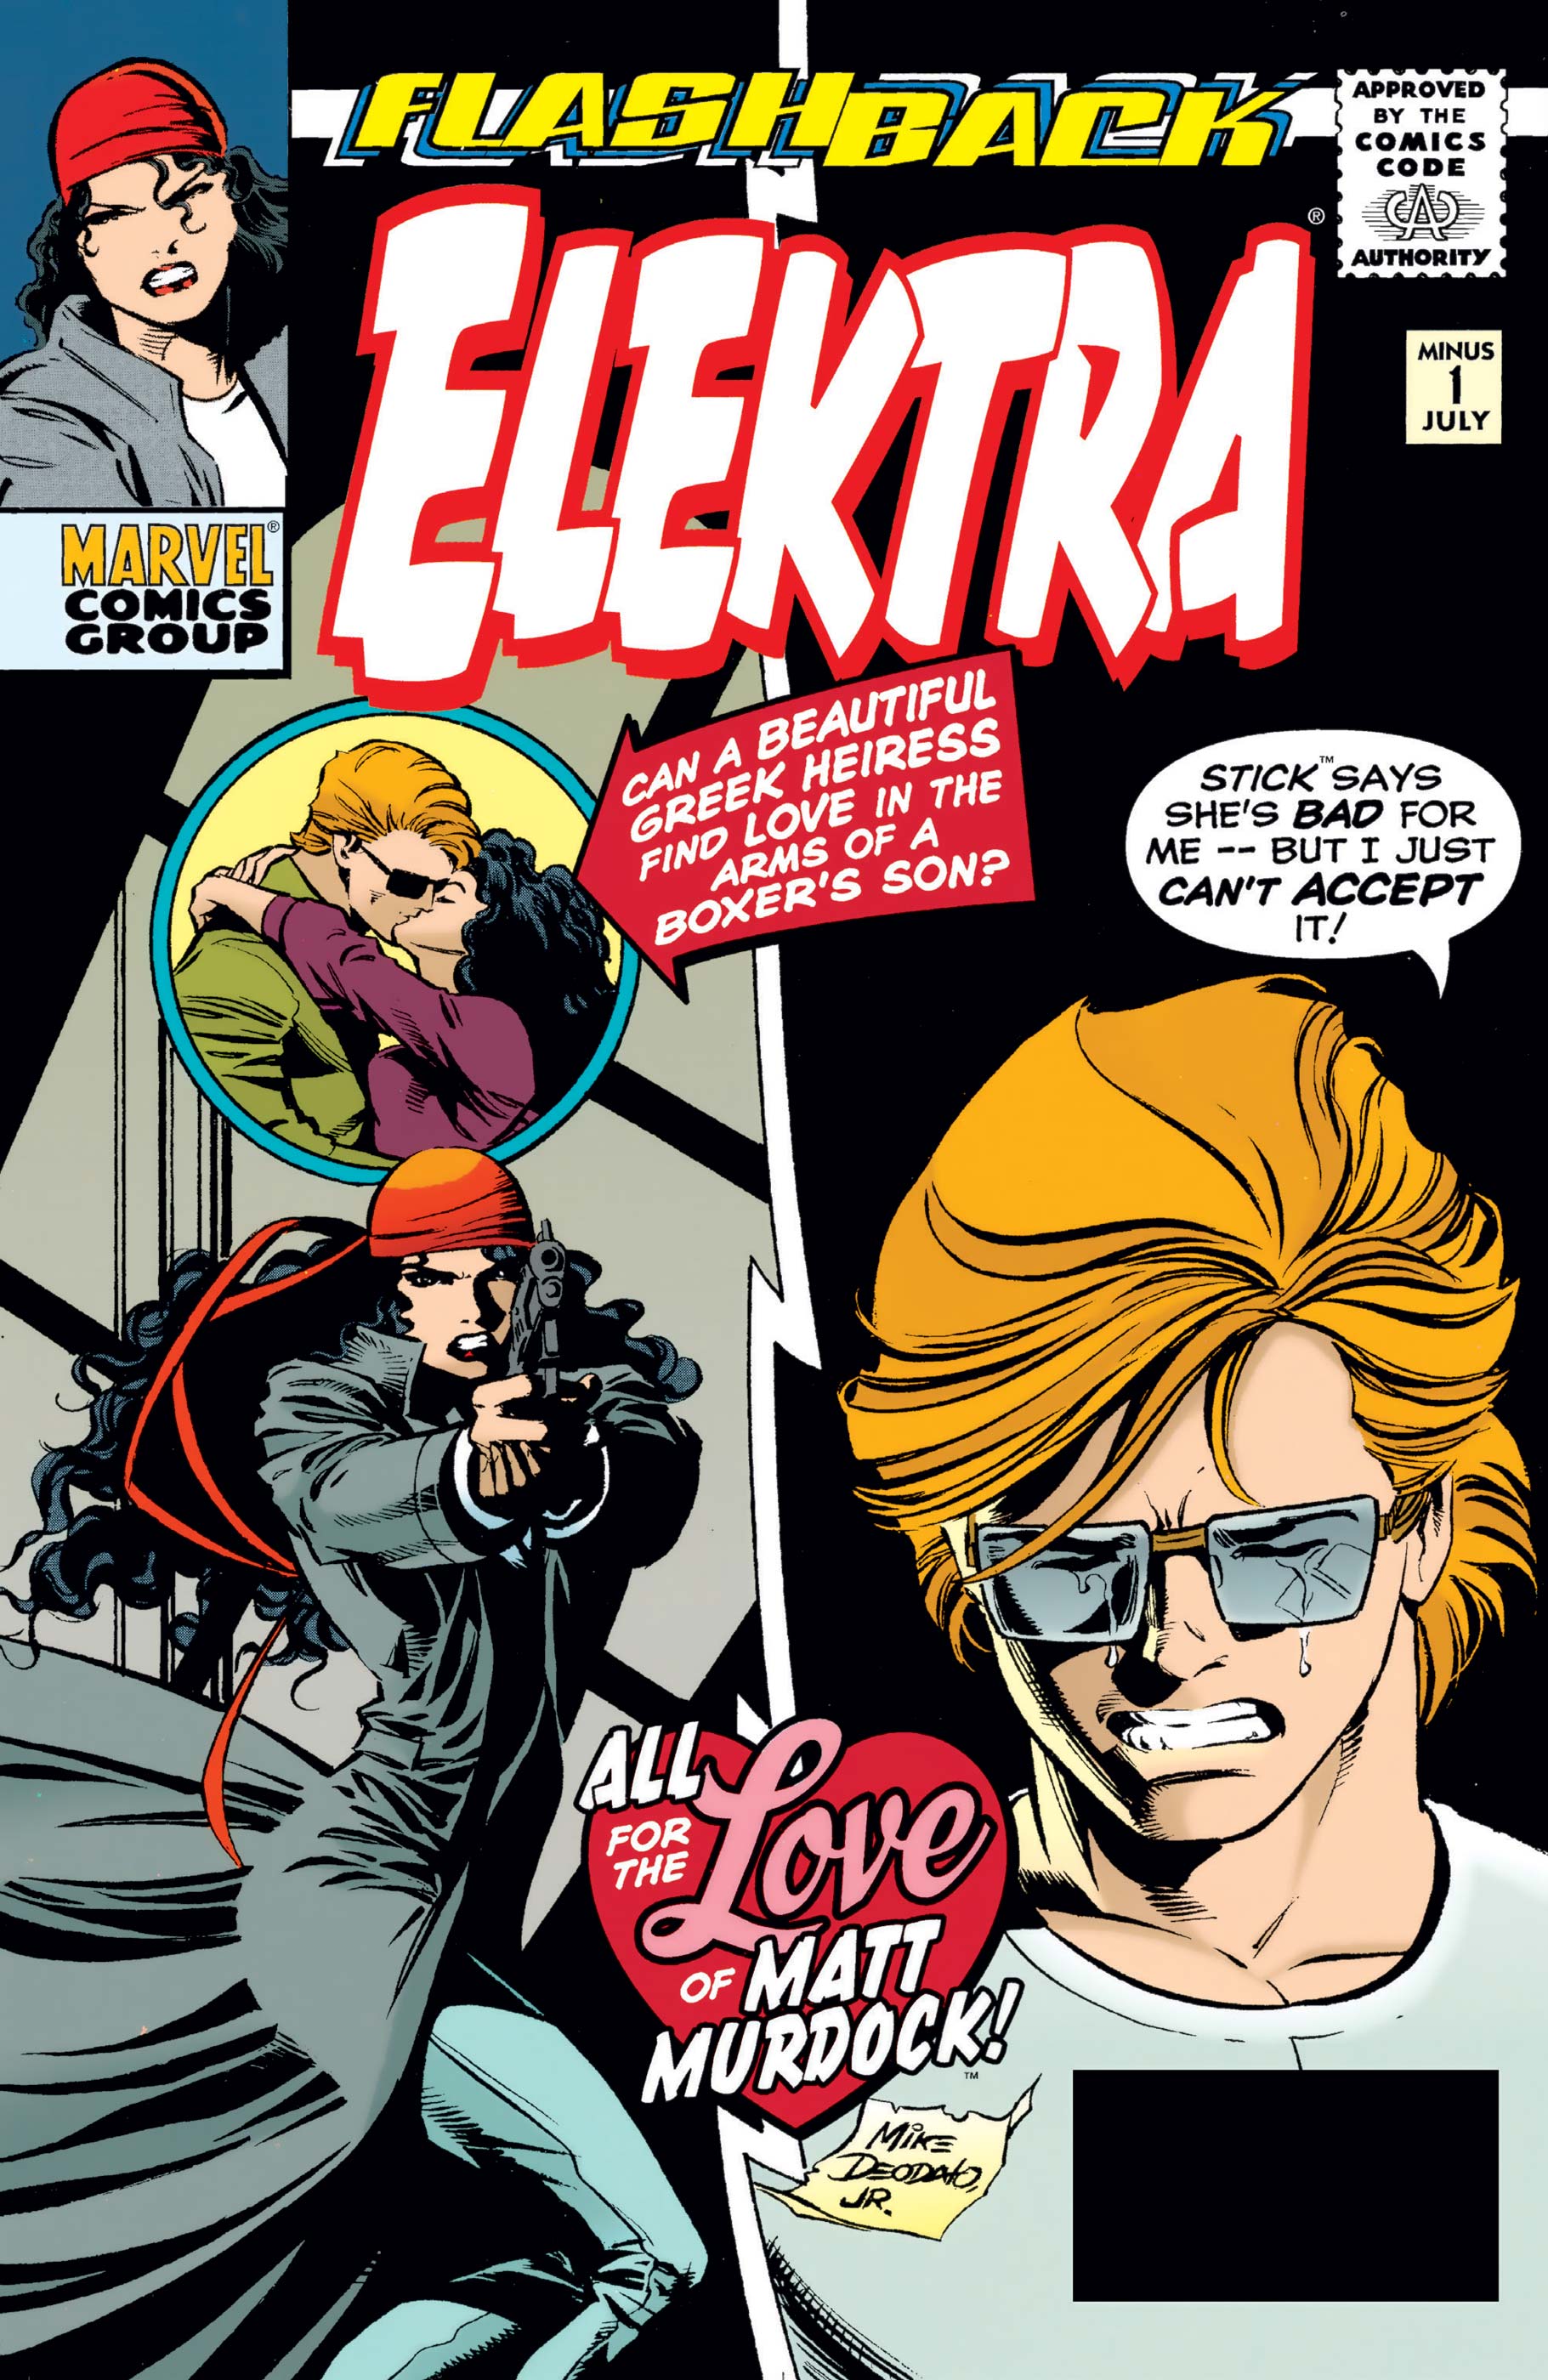 Elektra (1996) #-1